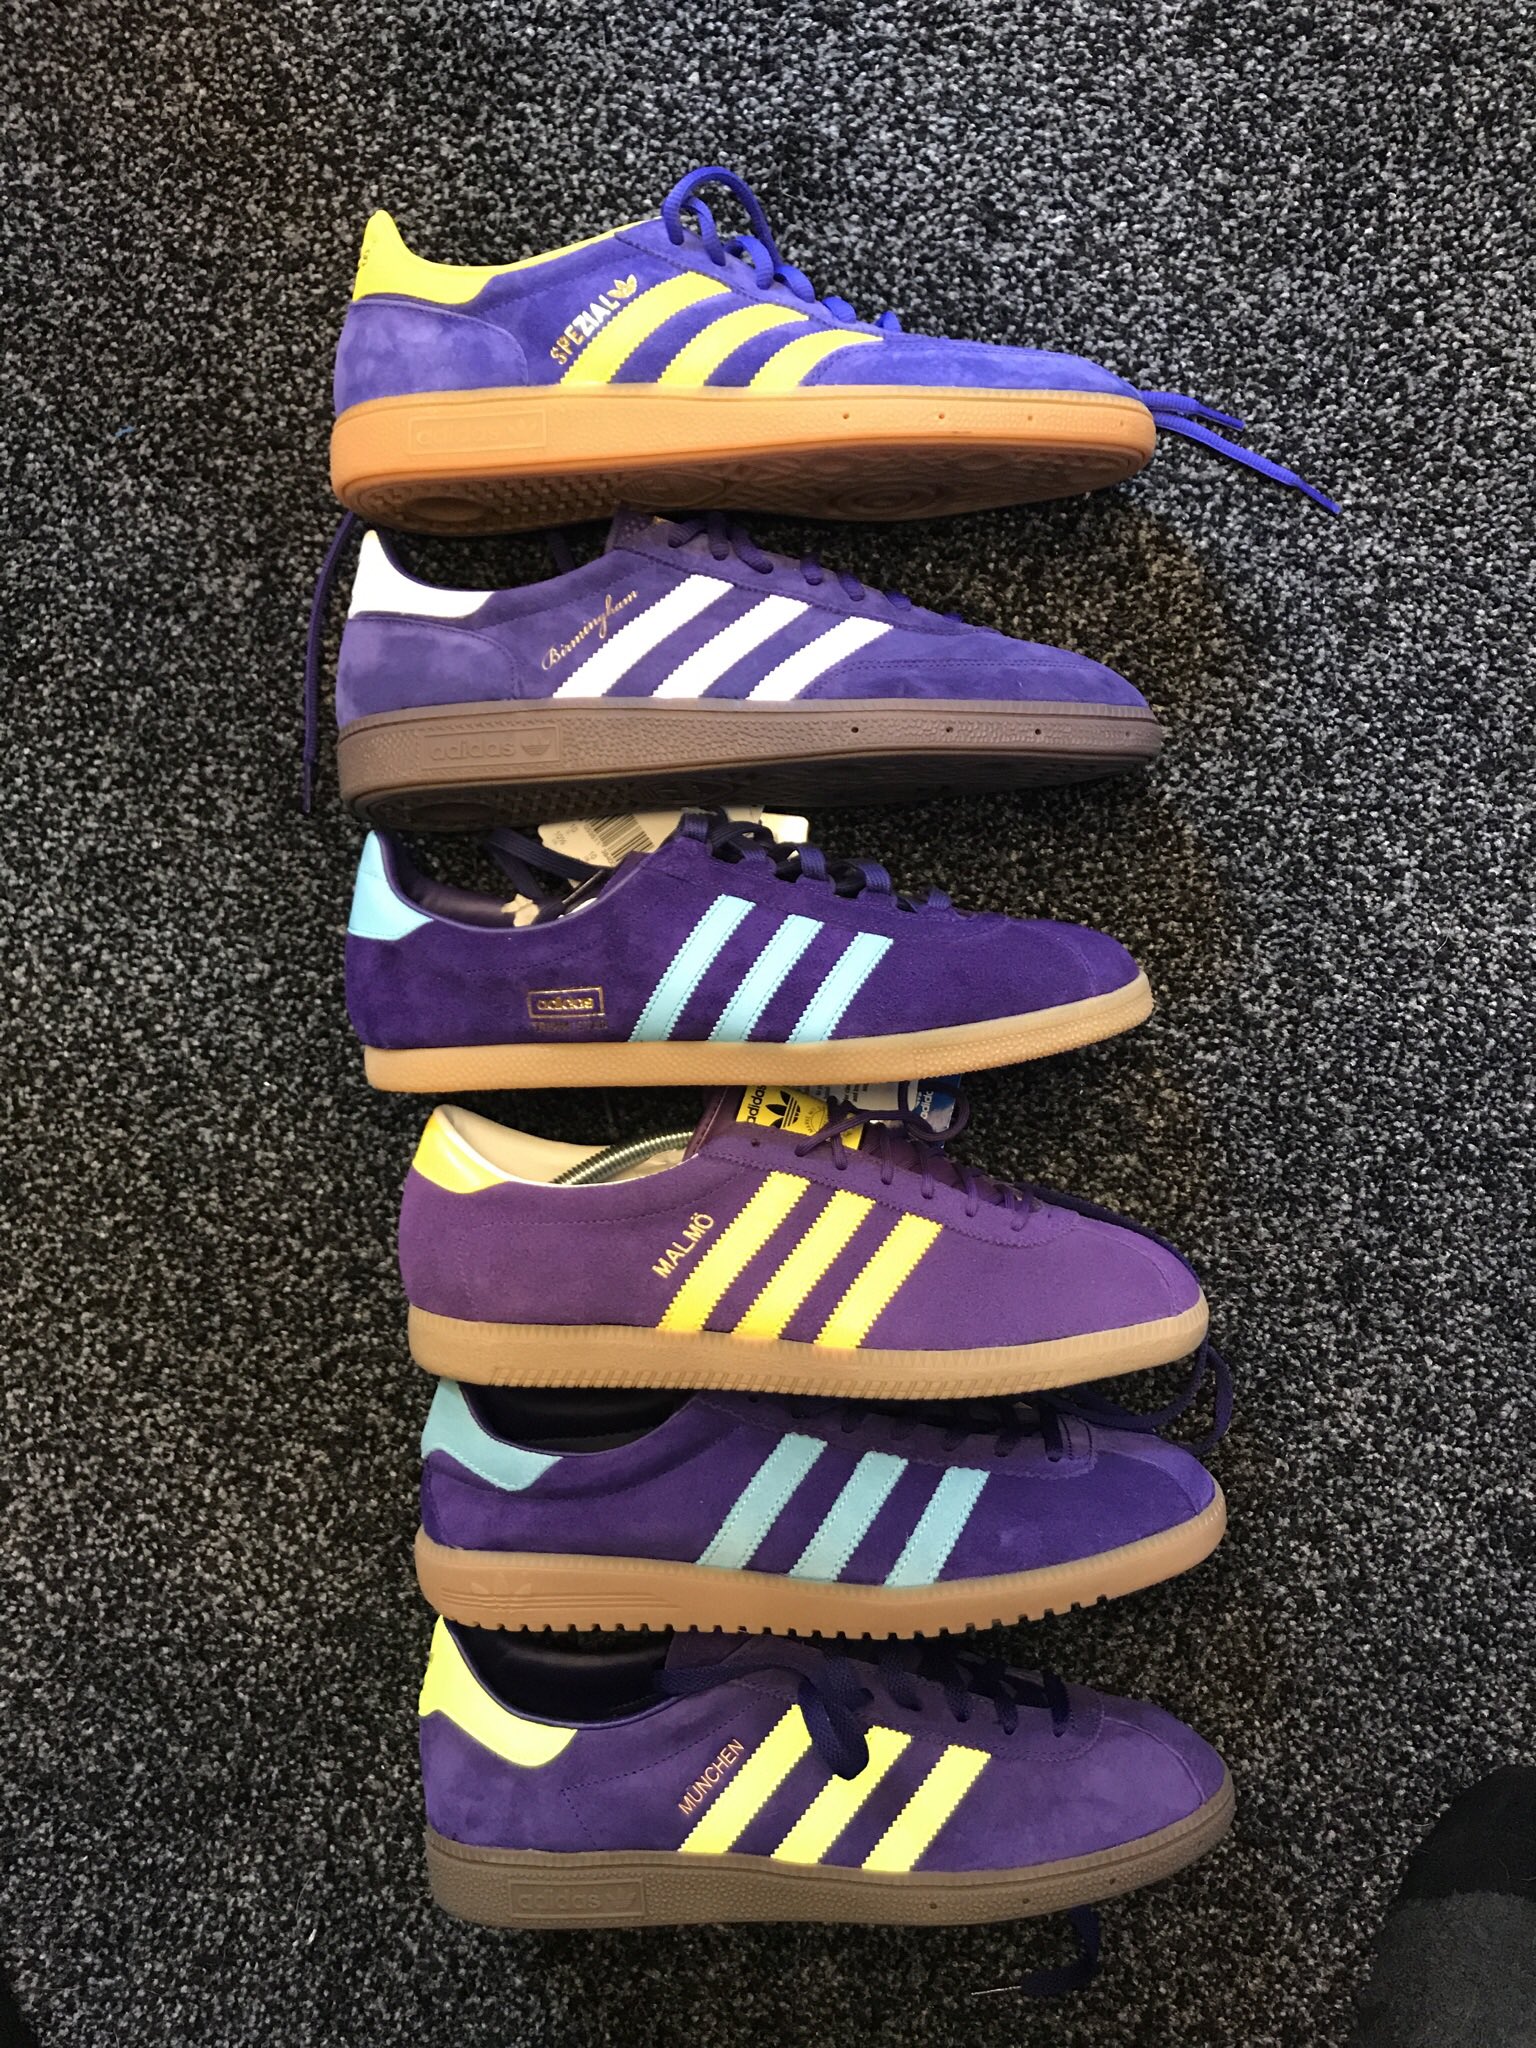 profundamente Transporte prometedor Andrew Forster (Fozzer) Adidas Addict on Twitter: "The colour is Purple.....adidas  Spezial, Birmingham, Trimm star, Malmo, Bermuda and Munchen!  https://t.co/Q1DUjJJ7Zg" / Twitter